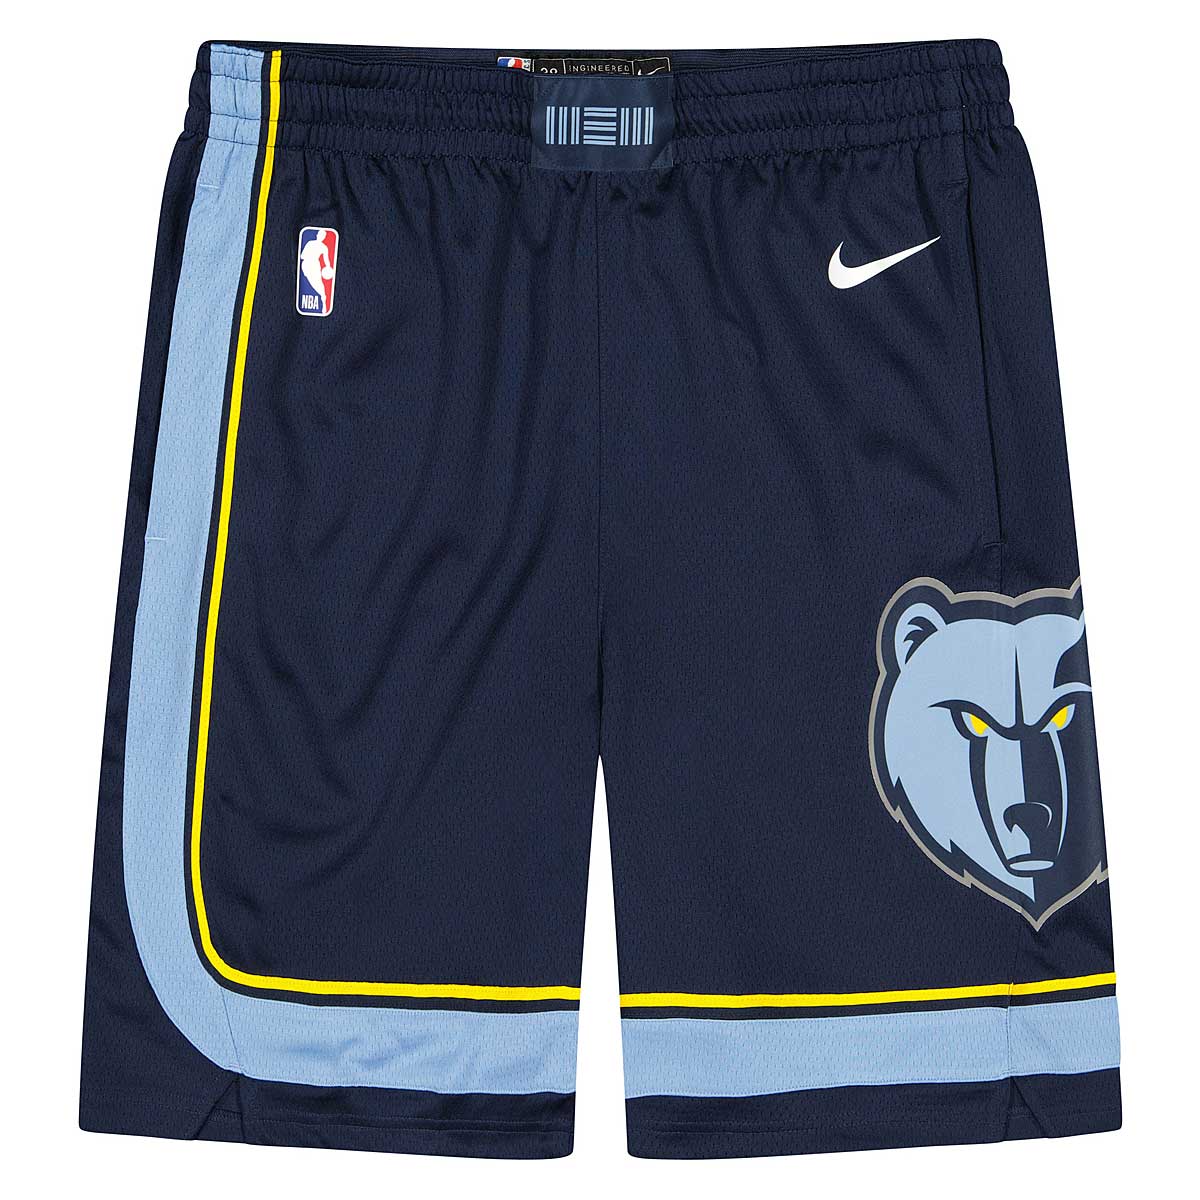 Nike NBA Memphis Grizzlies Dri-fit Icon Swingman Shorts, College Navy/light Blau/(weiß) M